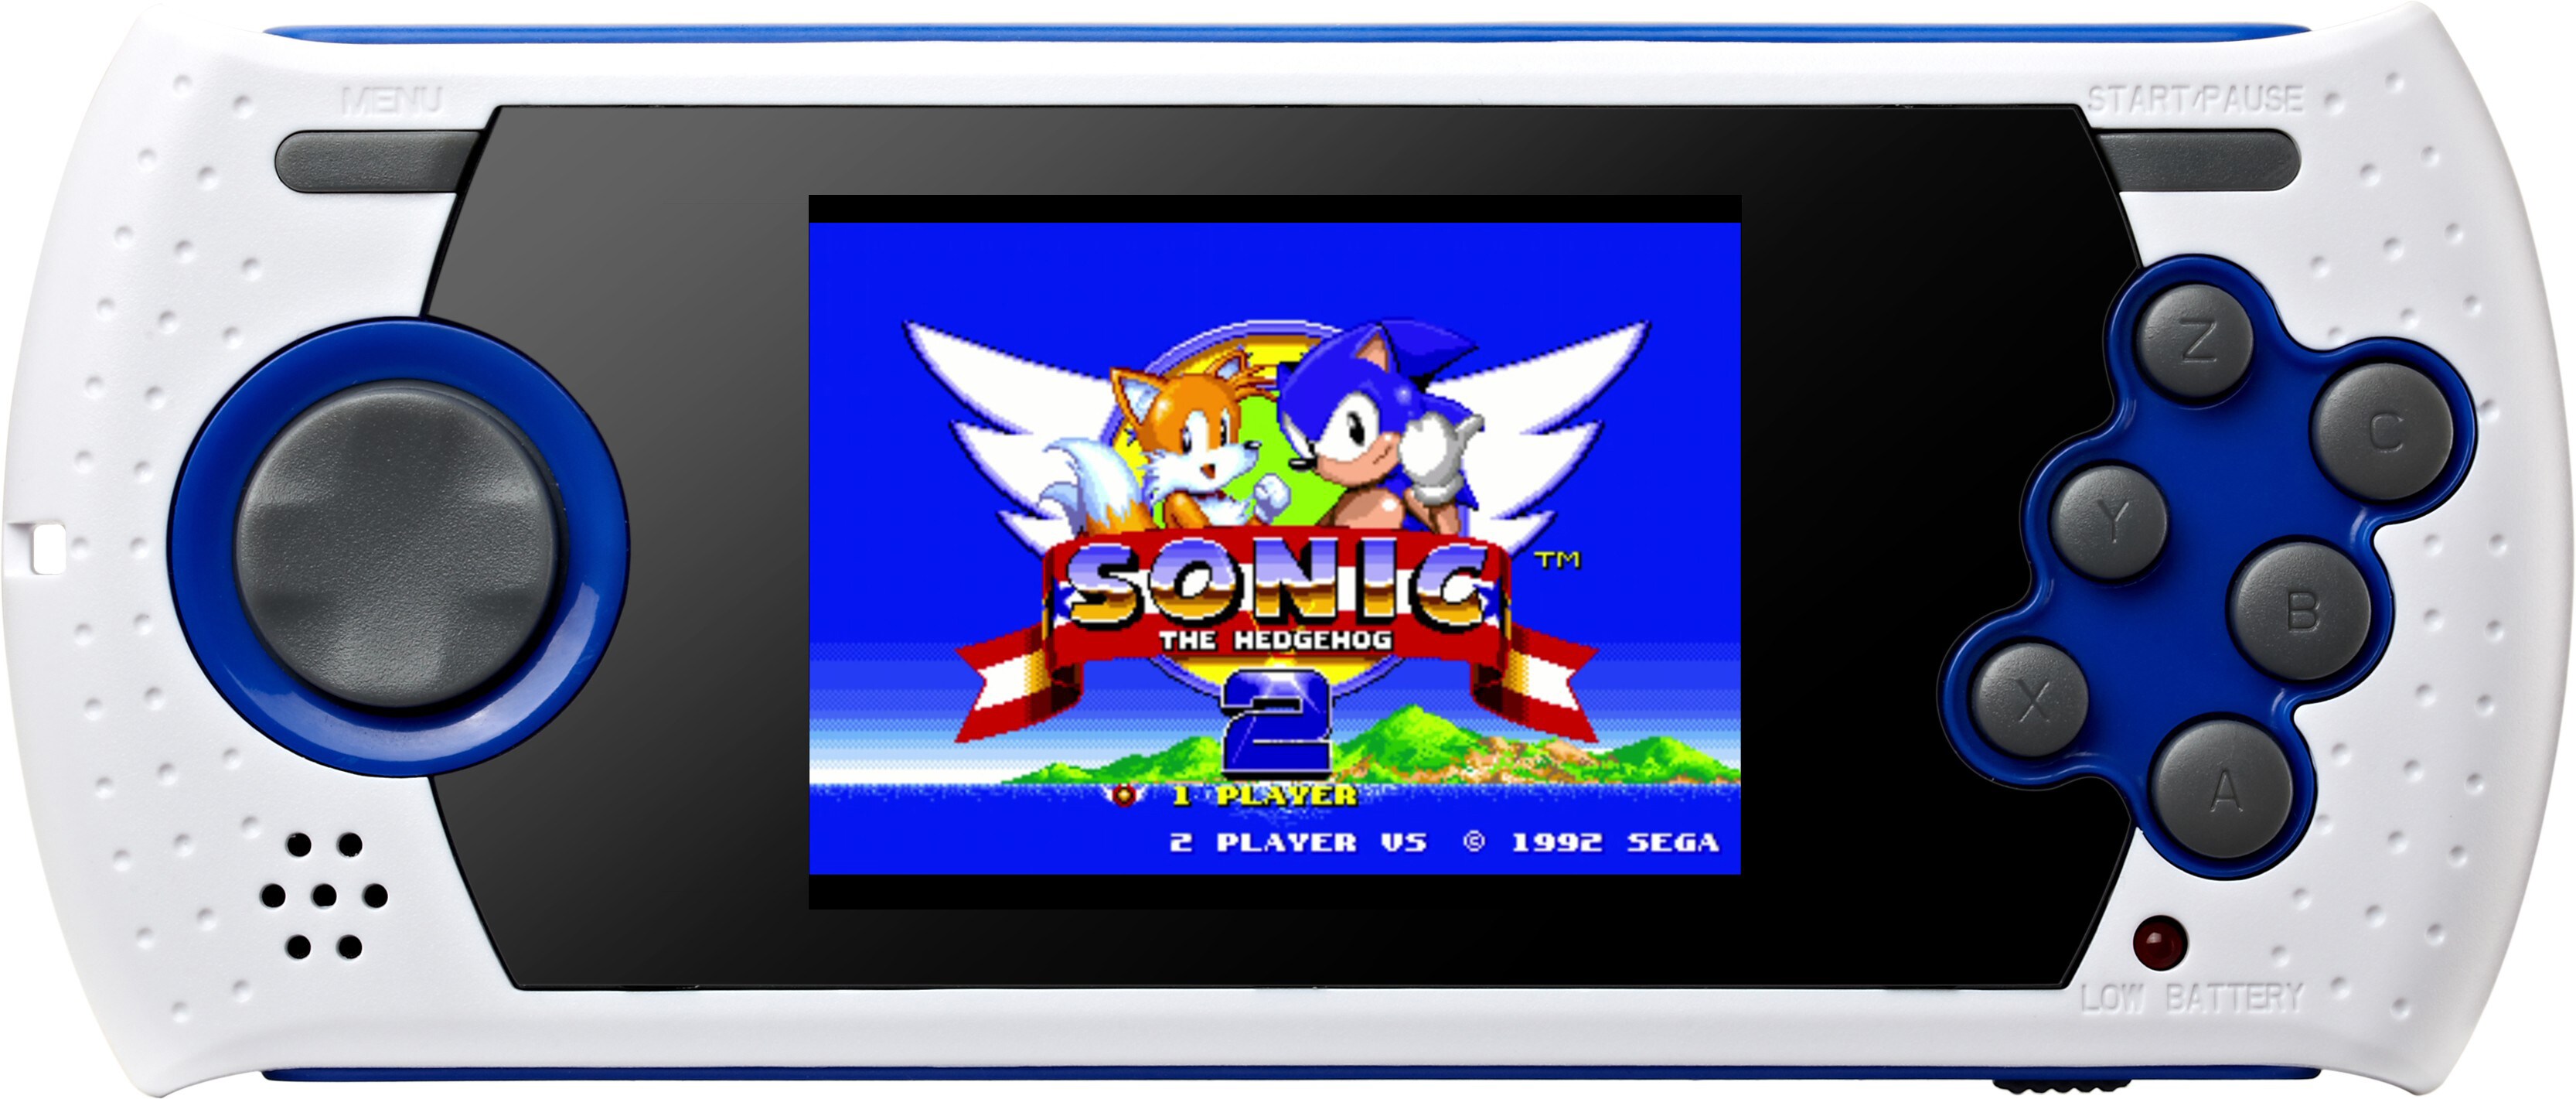 Sega Ultimate portabel spelkonsol - Spelkonsol - Elgiganten